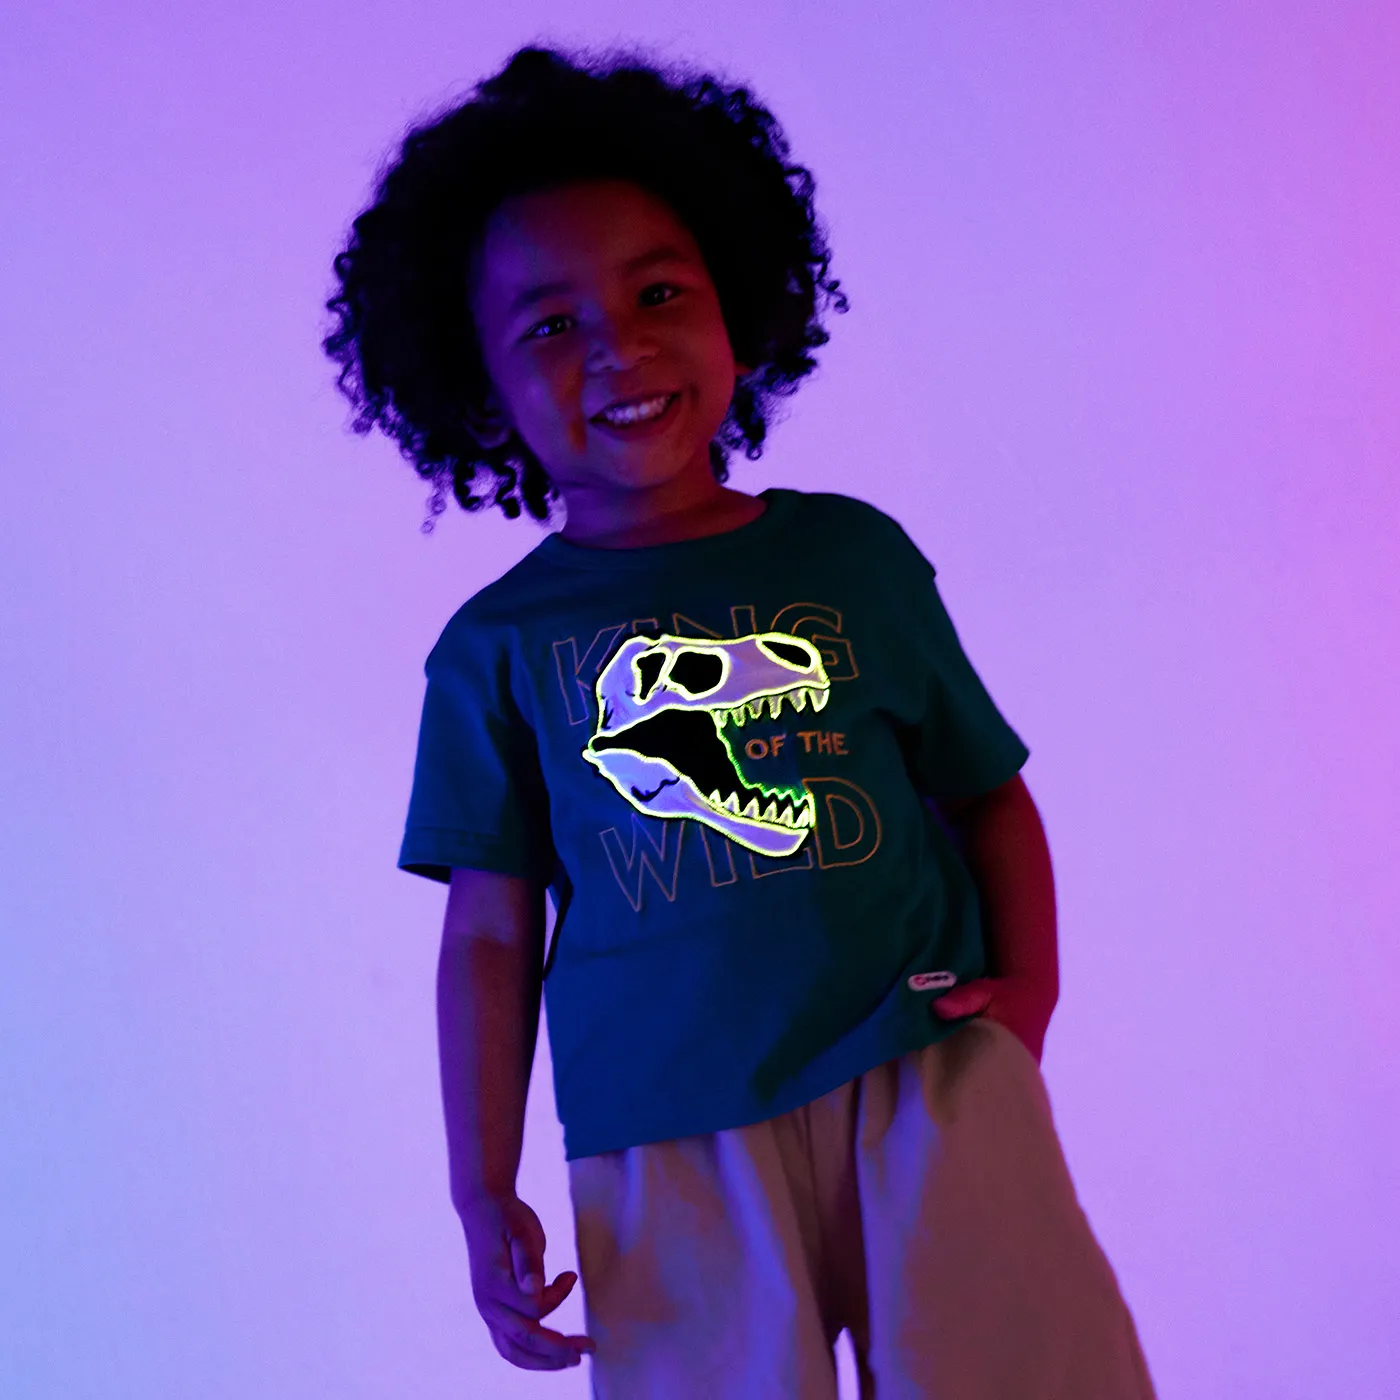 Go-Glow Illuminating T-shirt with Light Up Dinosaur Skull Pattern Including Controller (Built-In Bat